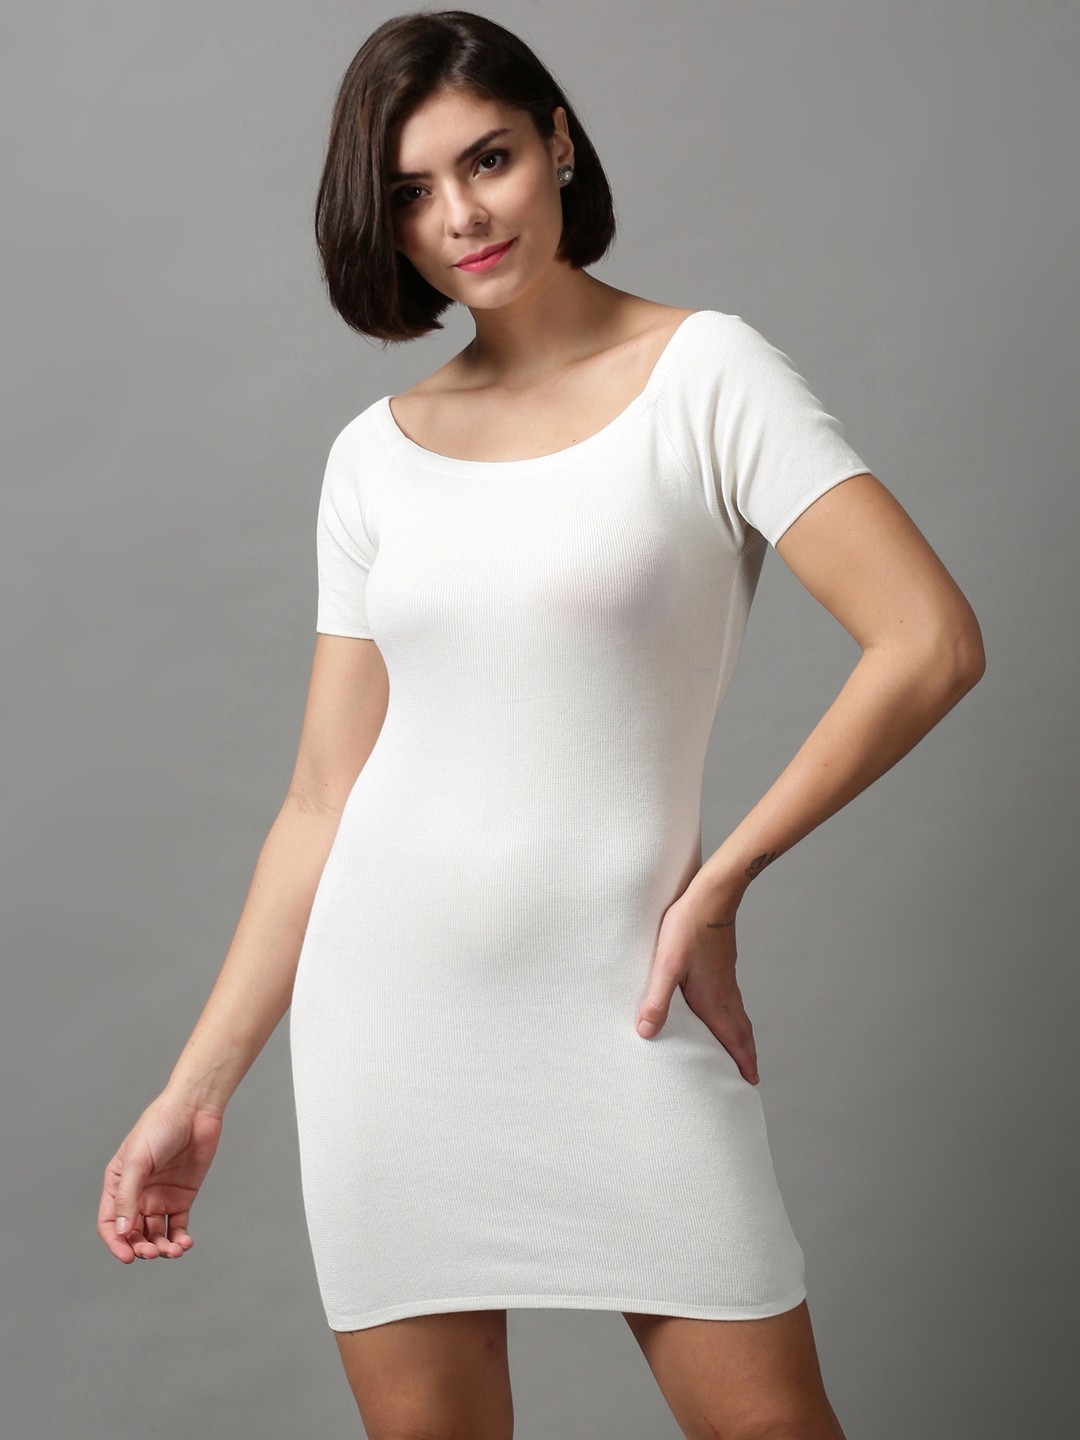 Women's White Acrylic Solid Dresses